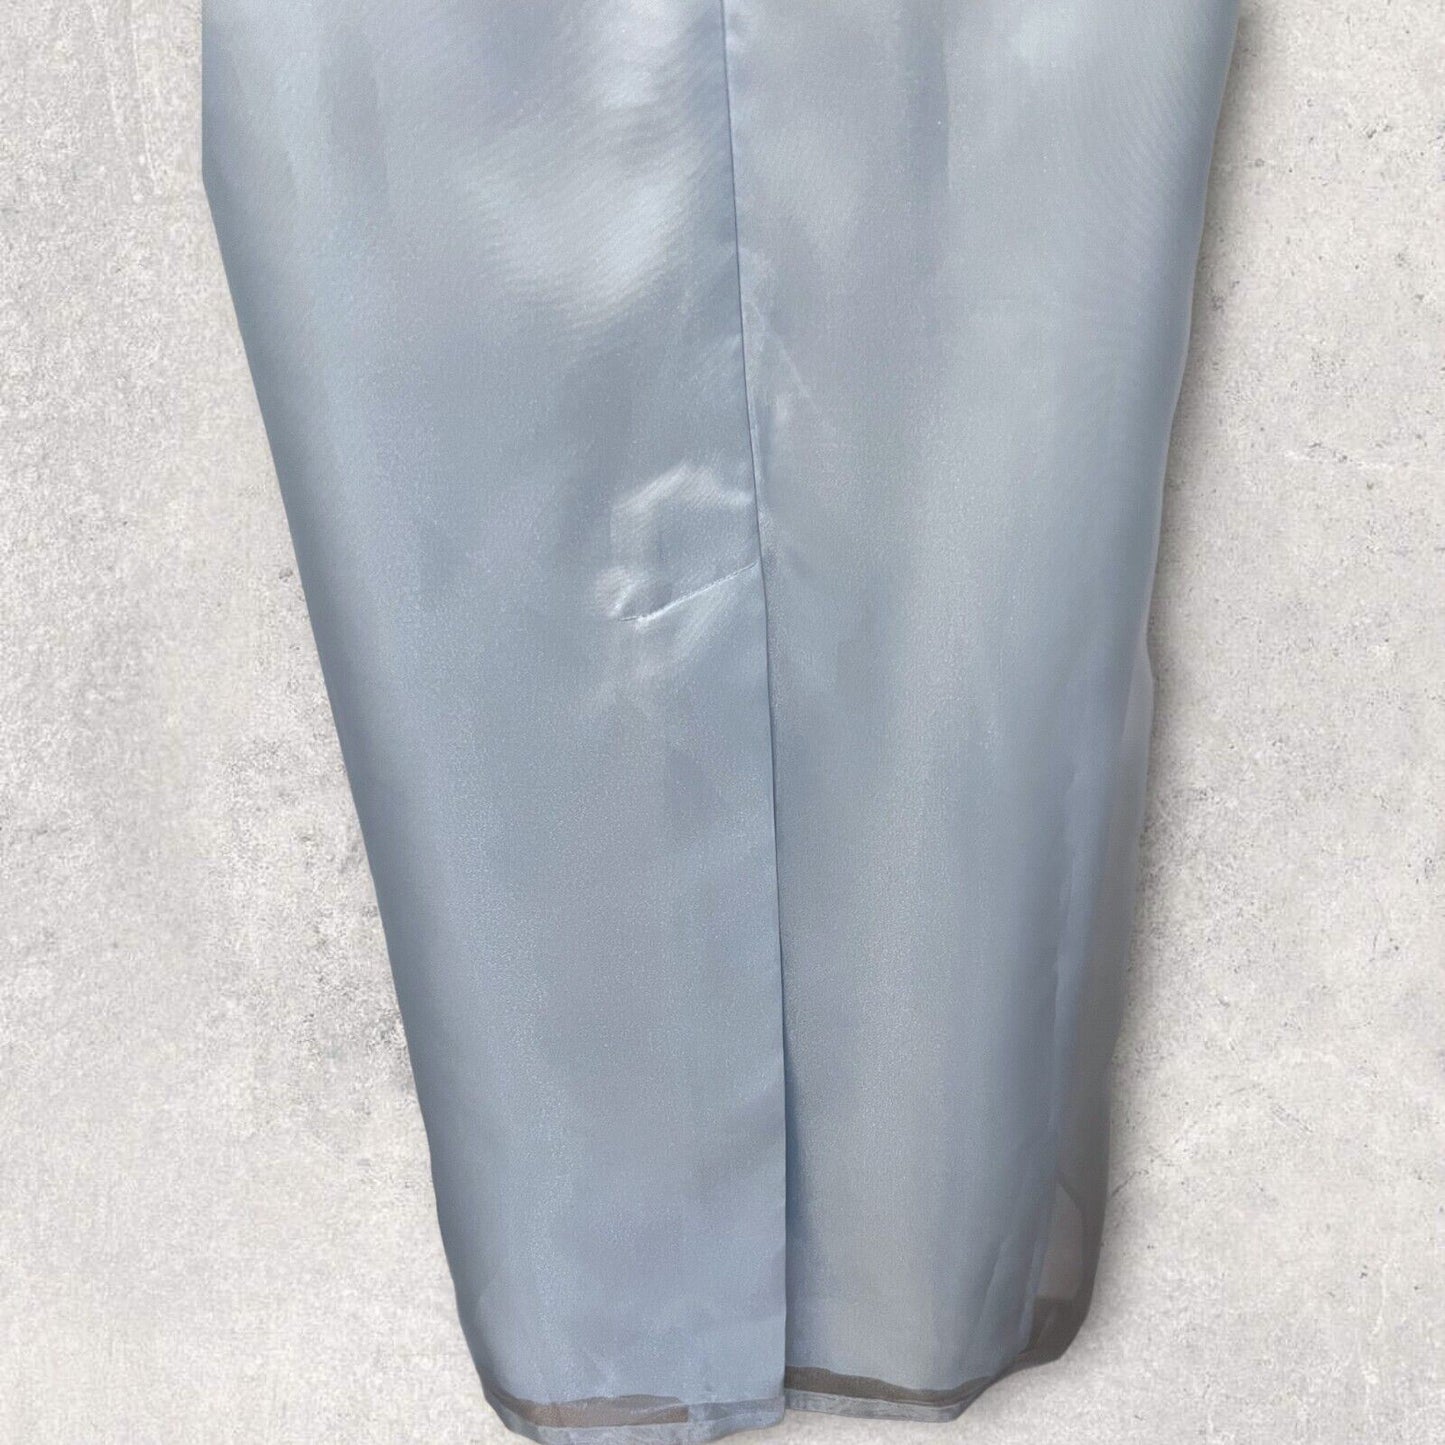 Zapa Ice Blue, Long Organza Snowflake Dress, UK 14 US 10 EU 42 BNWT RRP £245 Timeless Fashions